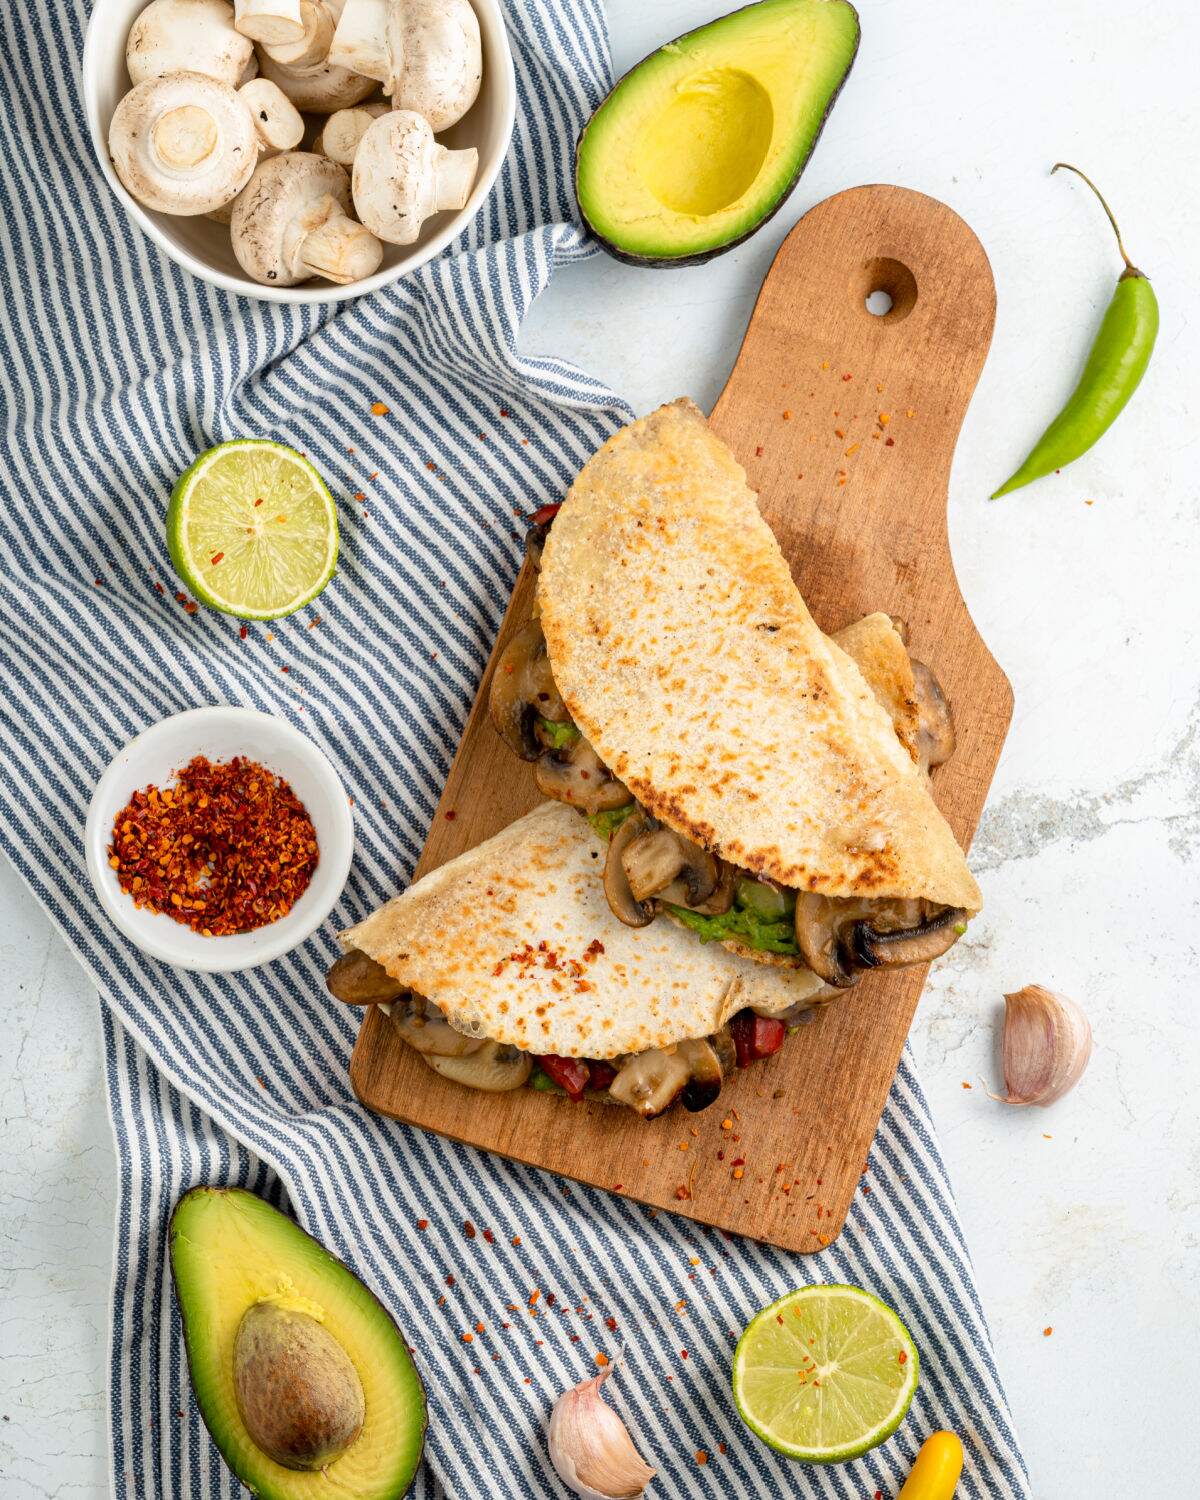 Mushroom Quesadillas with avocado, limes and garlic